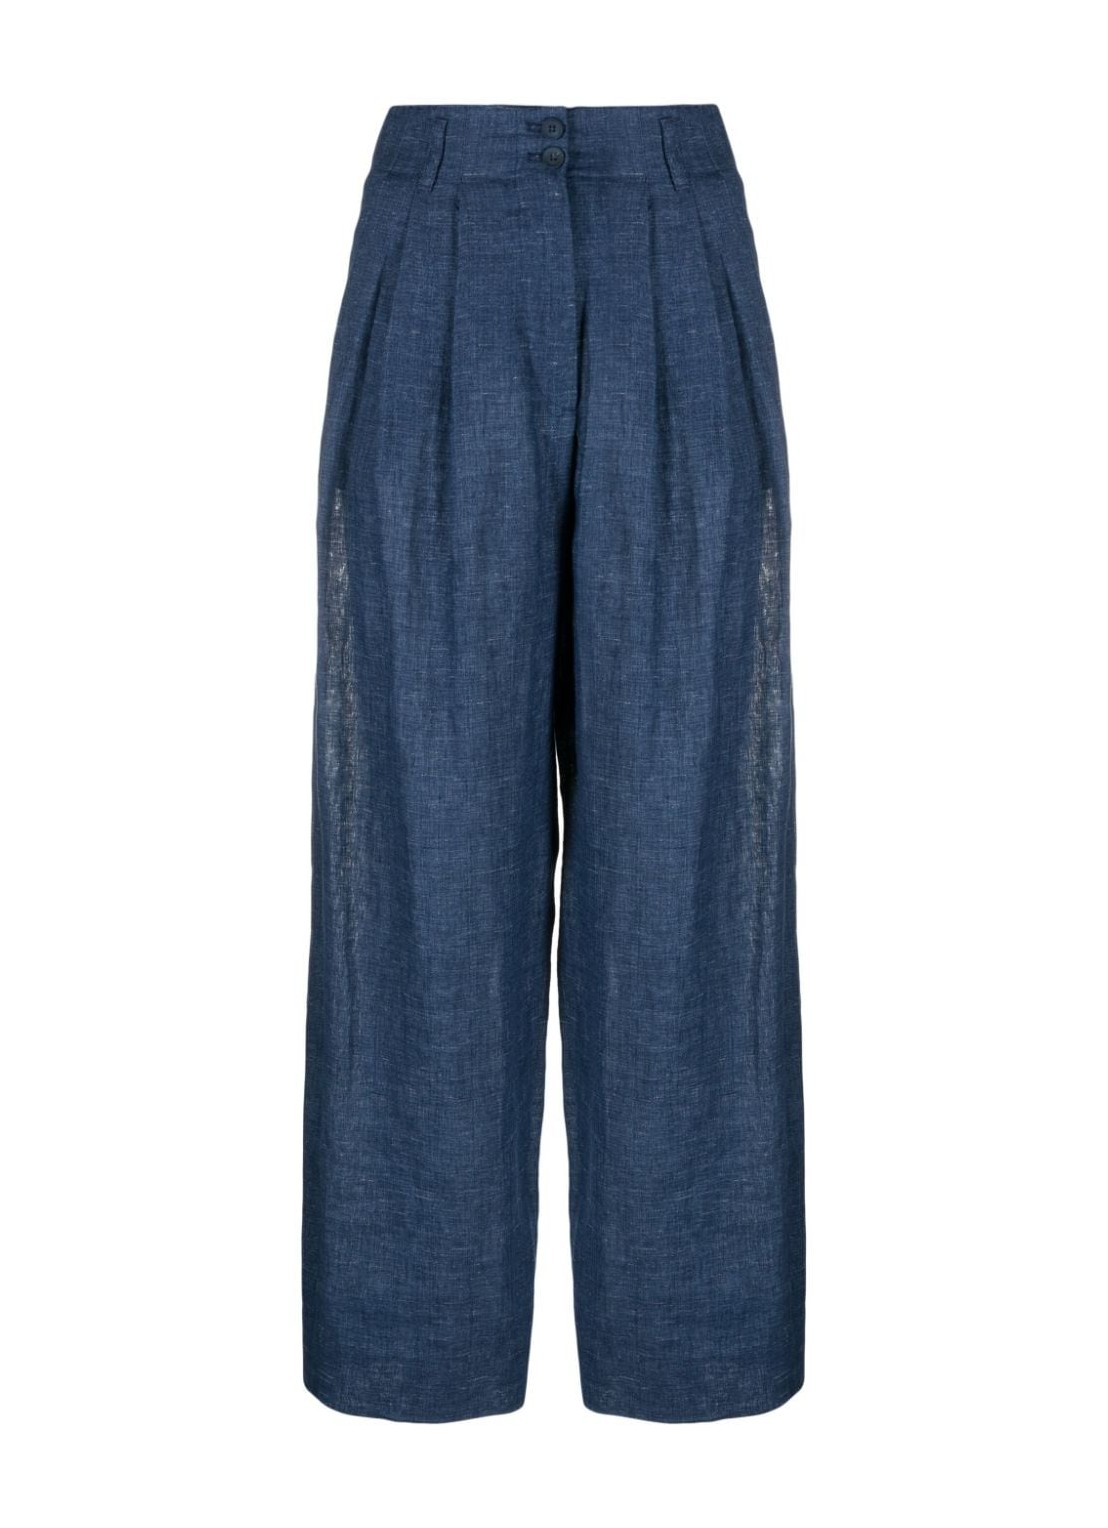 Pantalon emporio armani pant  woman trousers e3np23f2017 900 talla Azul
 